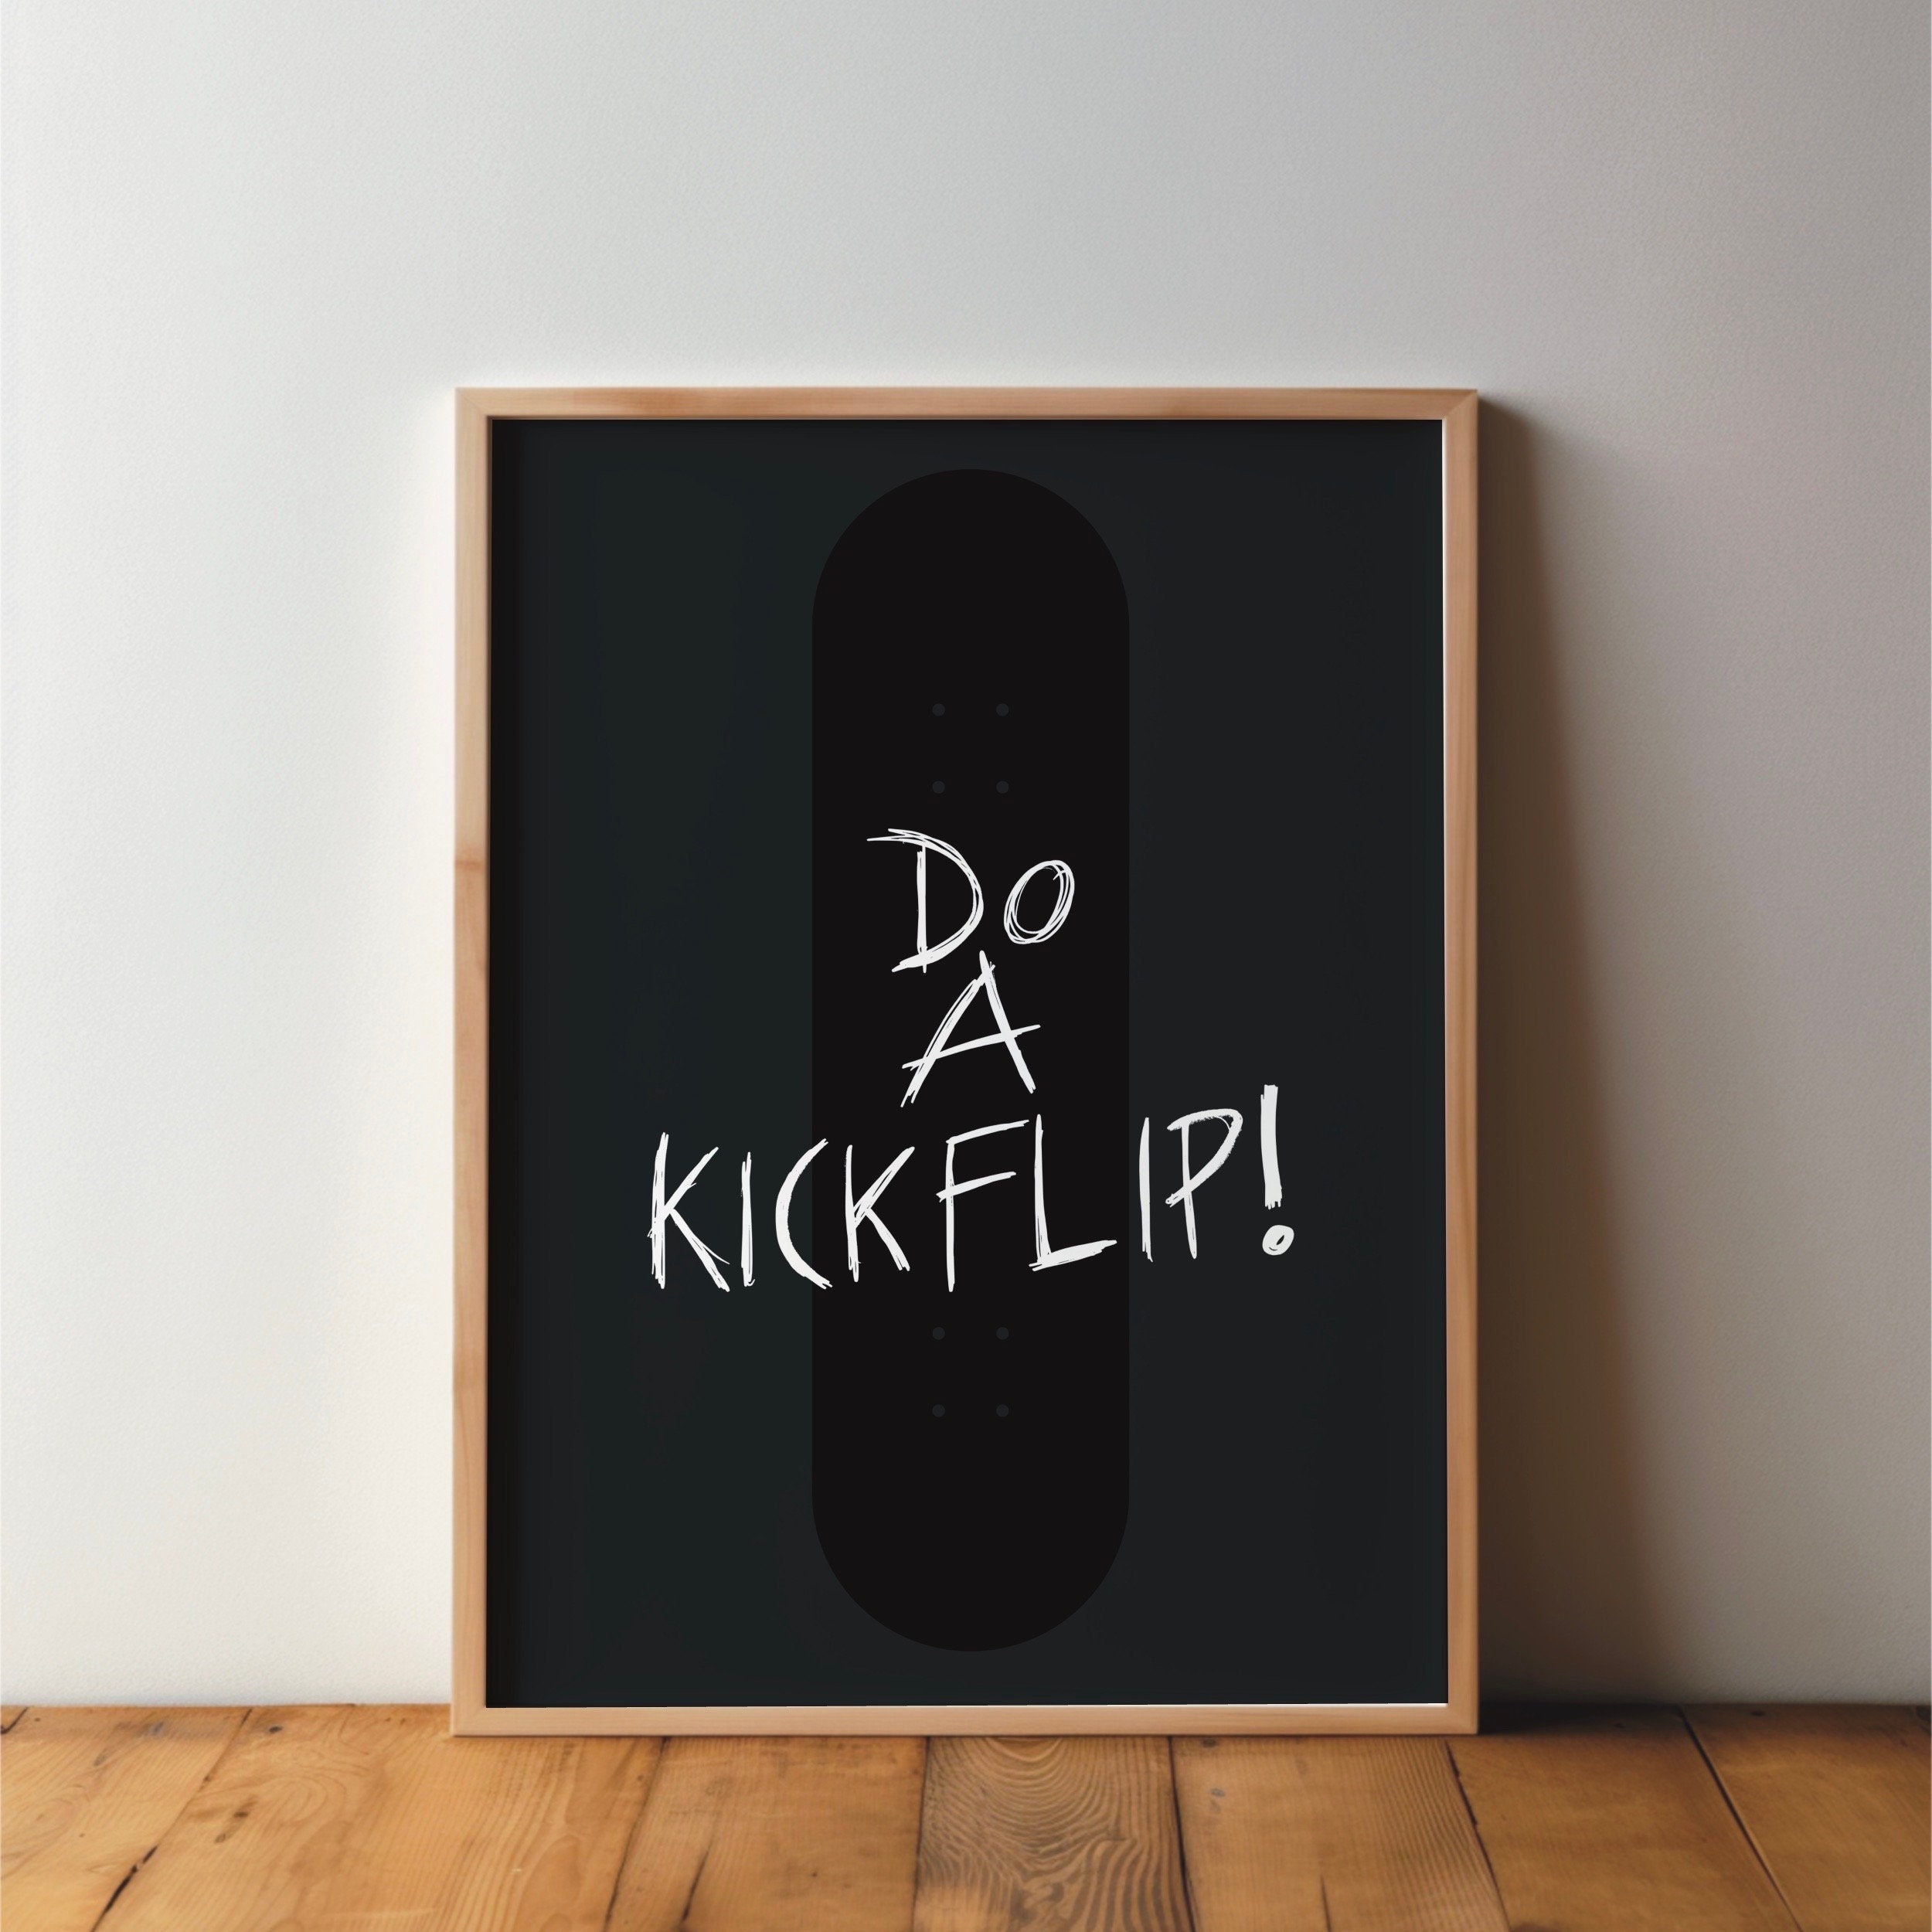 Do a kickflip! : r/meme